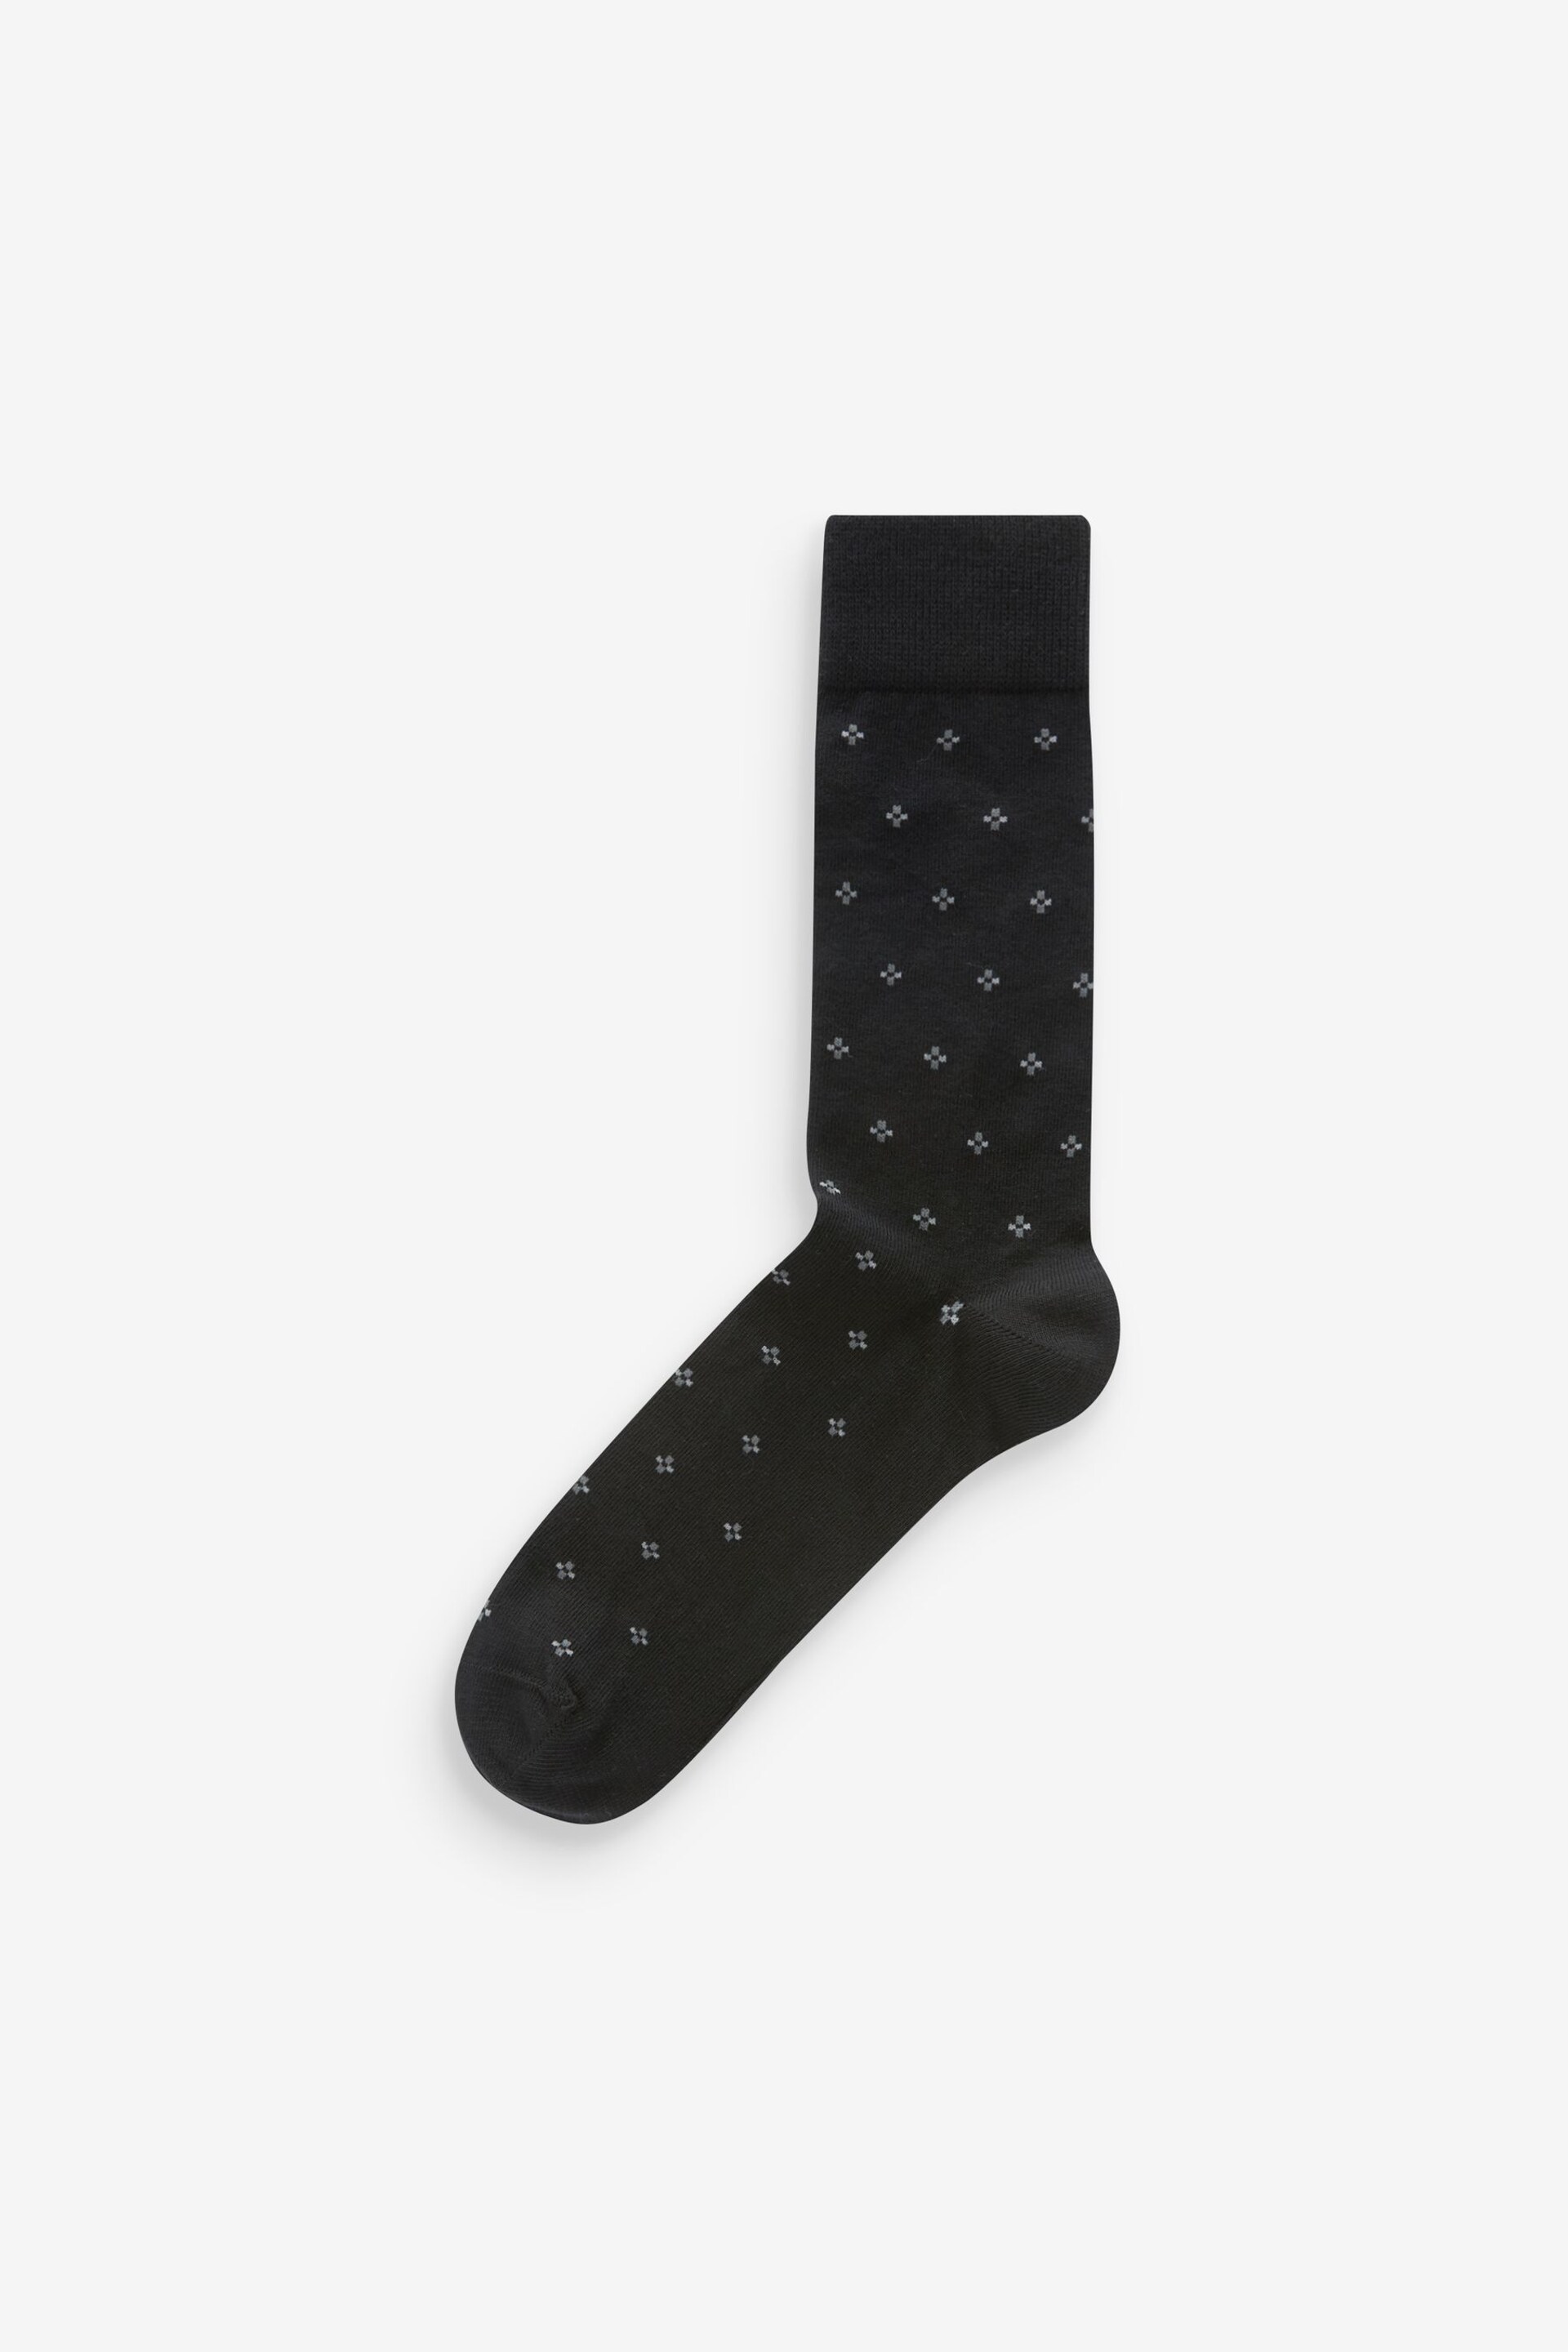 Navy Blue/Black Pattern Smart Socks 8 Pack - Image 6 of 10